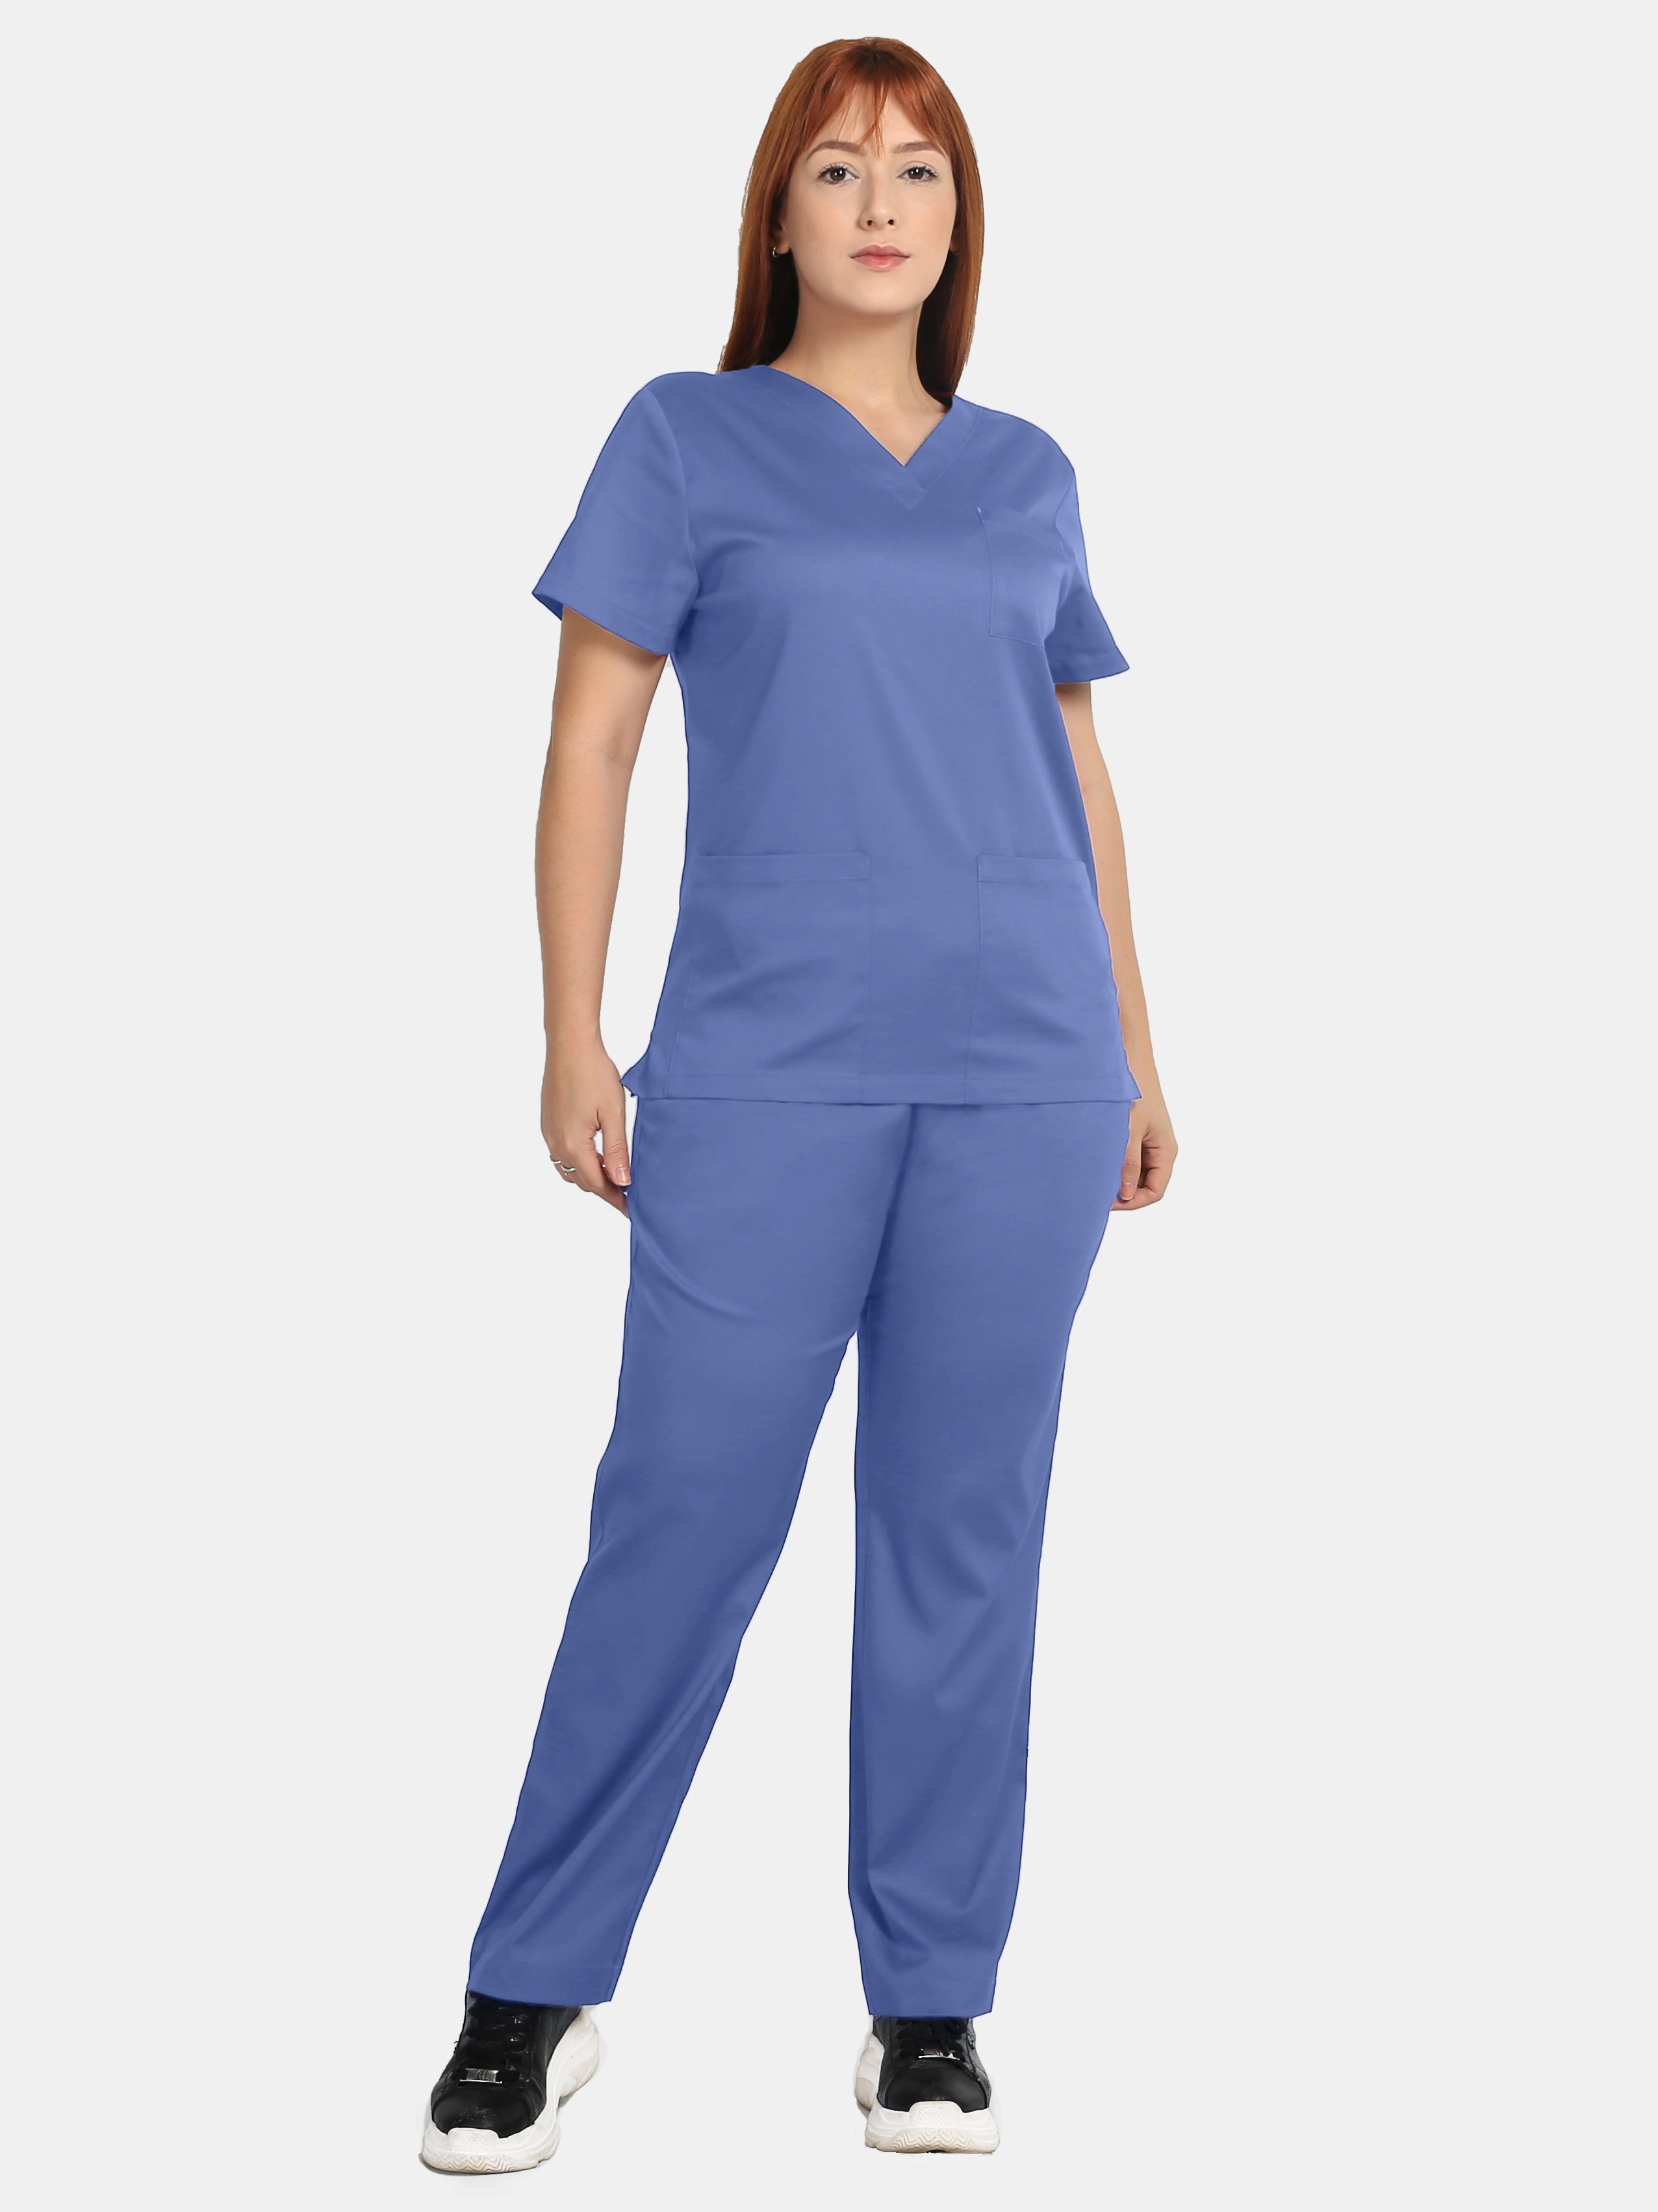 Royal blue Medical Uniform Women Breathable Nursing Scrubs Tops Shirt  Casual Short Sleeve Uniforms Nurse Pants Surgical Clothes